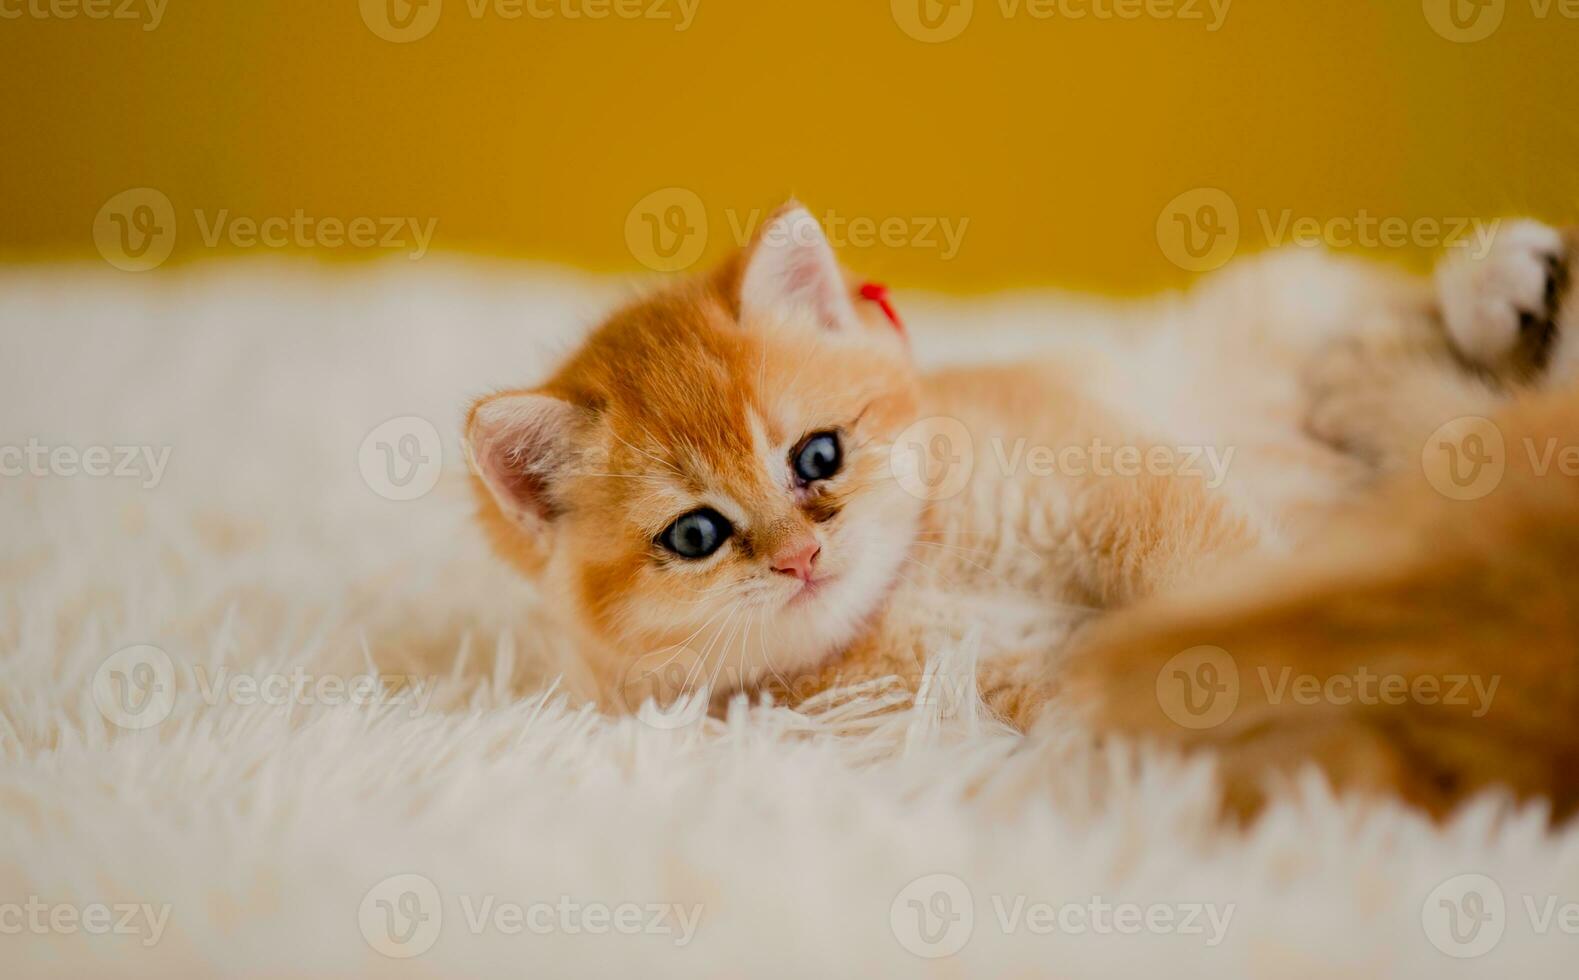 naranja gato linda gato linda mascota dormido gatito linda gatito gato crecimiento madurez el Mira y inocencia de gatos foto